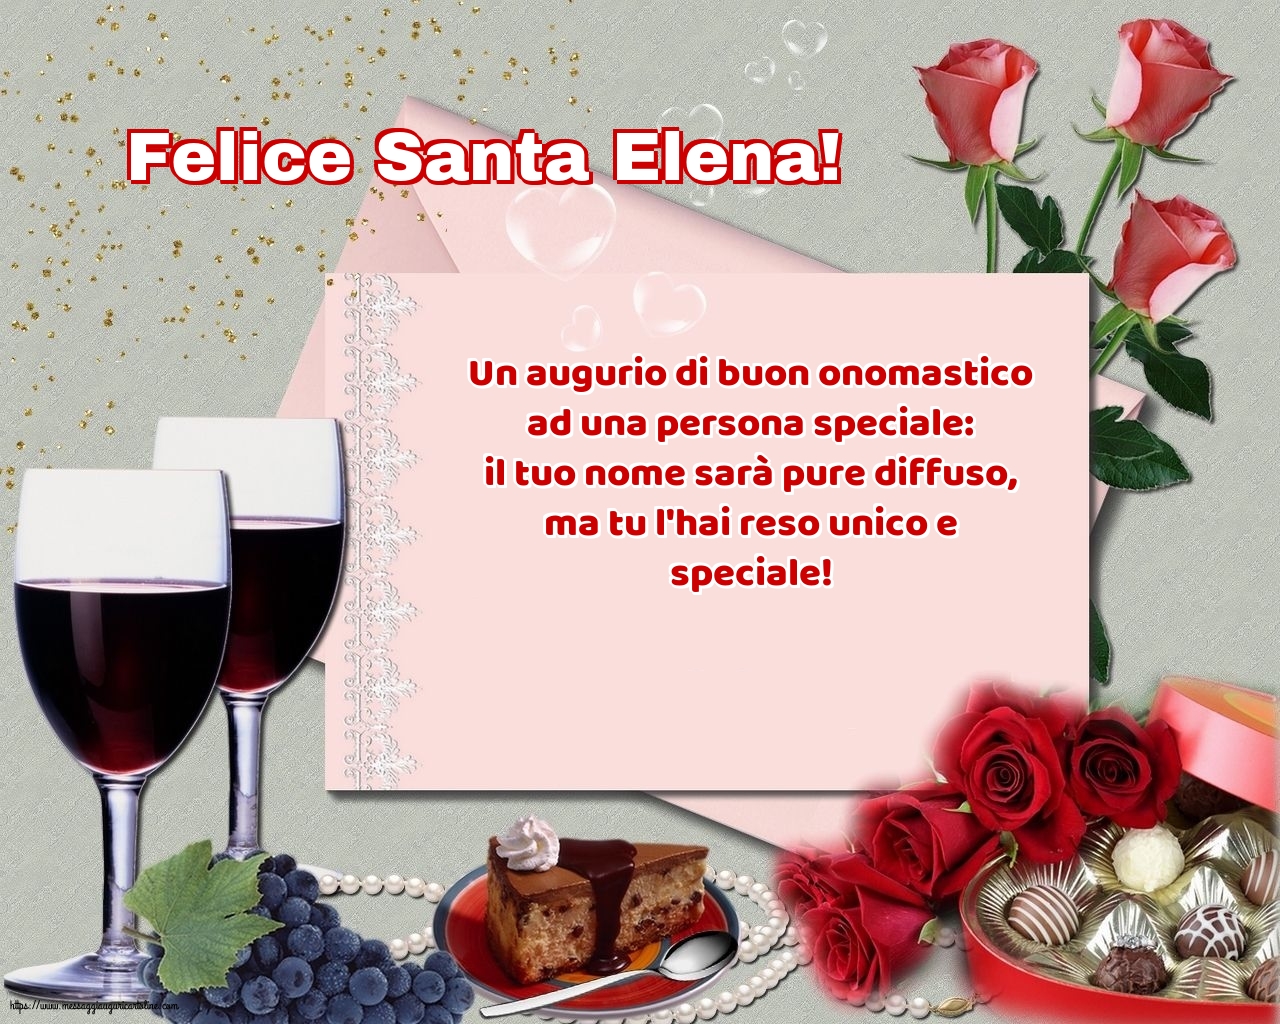 Felice Santa Elena!